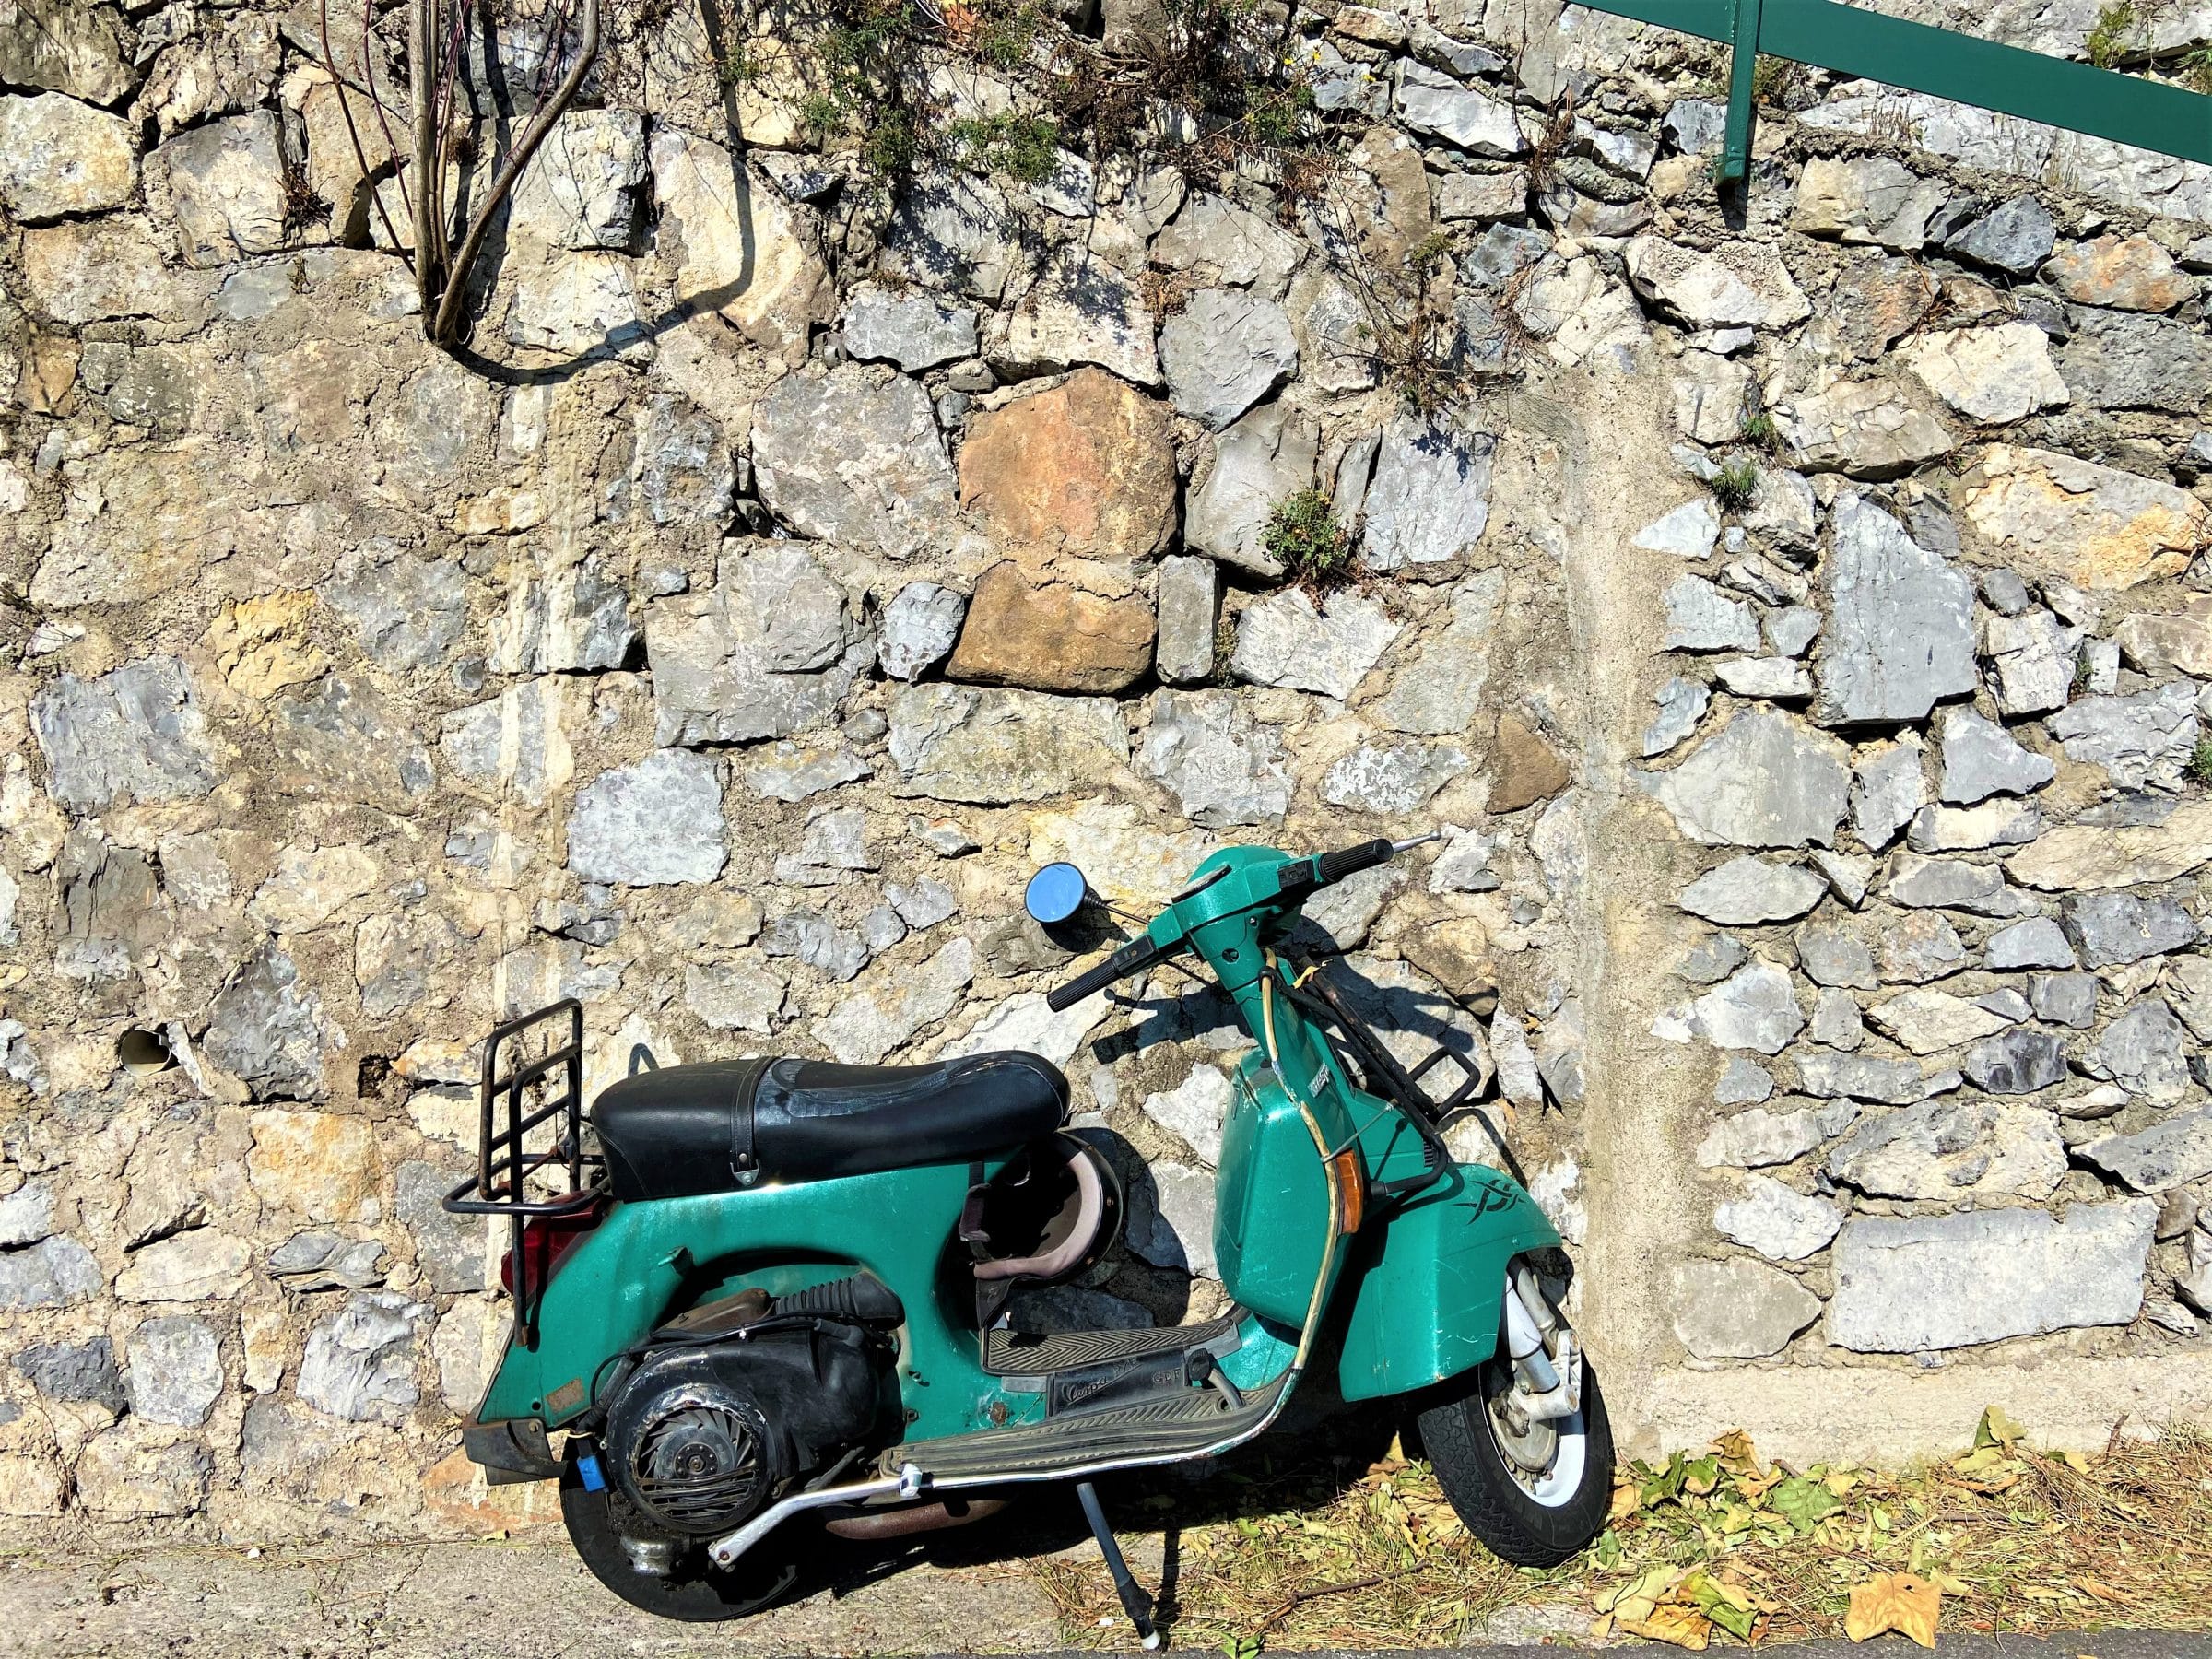 Scooter | roadtrip Zuid-Italië | Wereldreizigers.nl